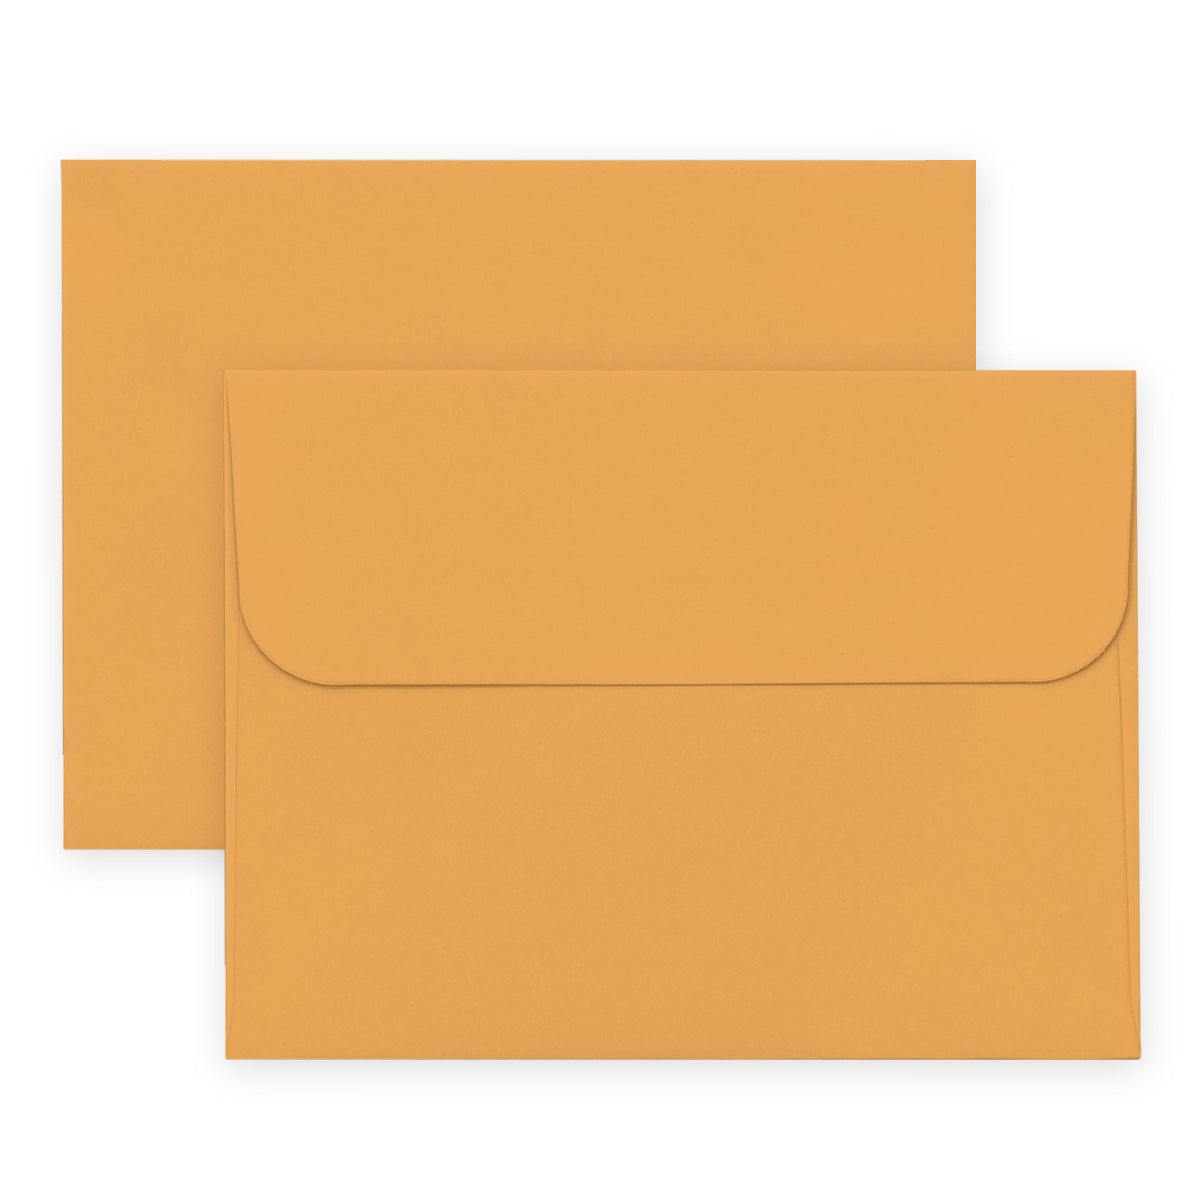 Envelope Crafty Necessities: Pumpkin Pie Envelope (12/pk)